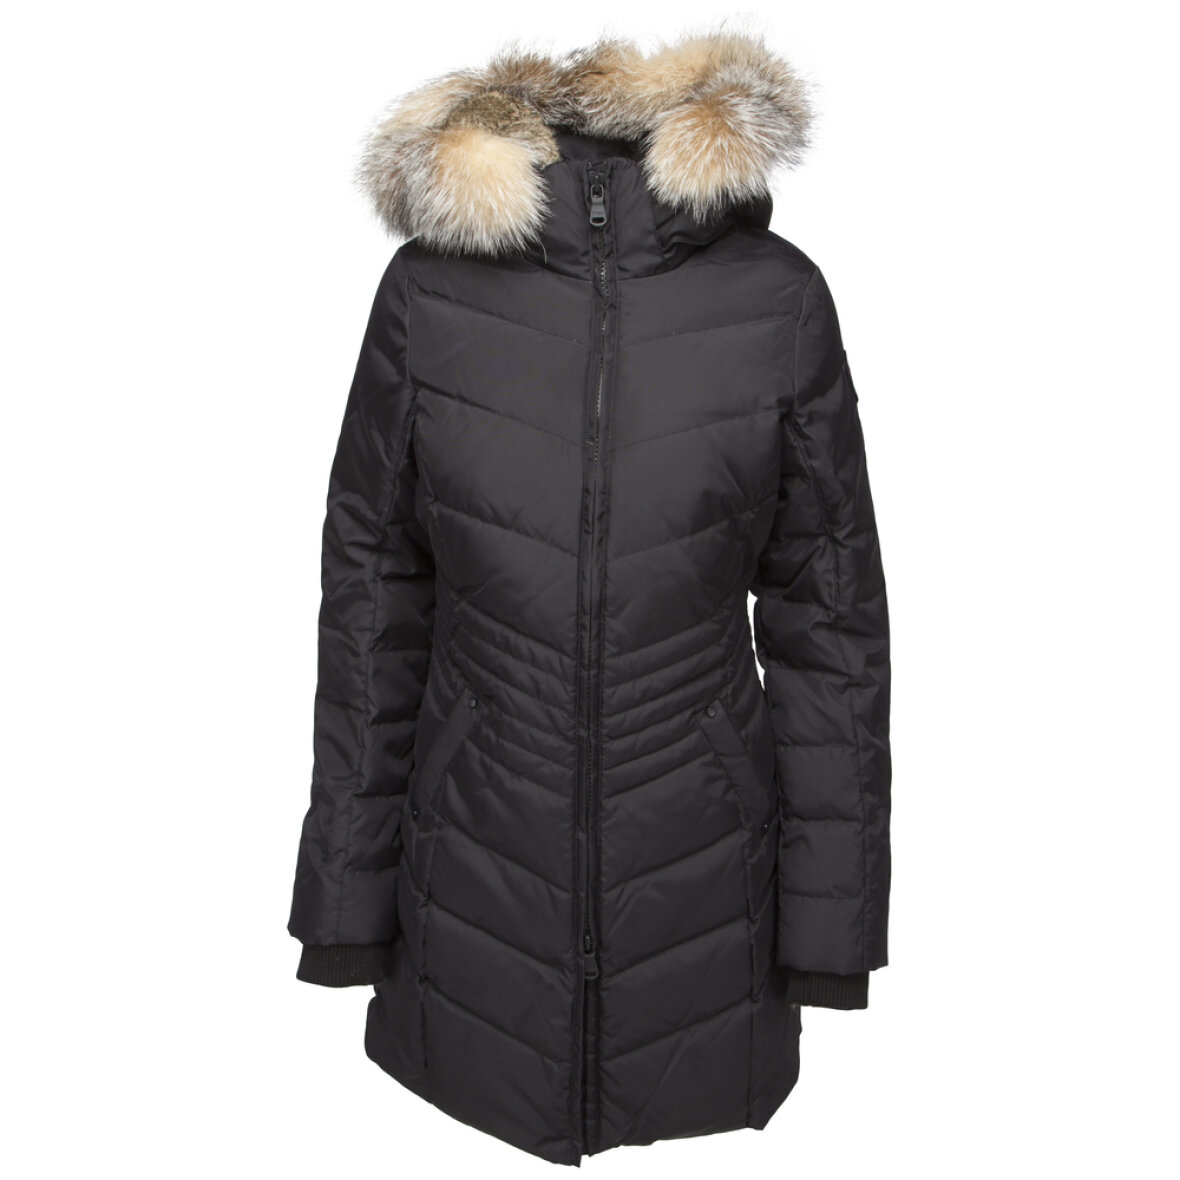 vulkansk Hurtig revidere pajar Pajar Brooklyn long length jacket sort - Shop online nu